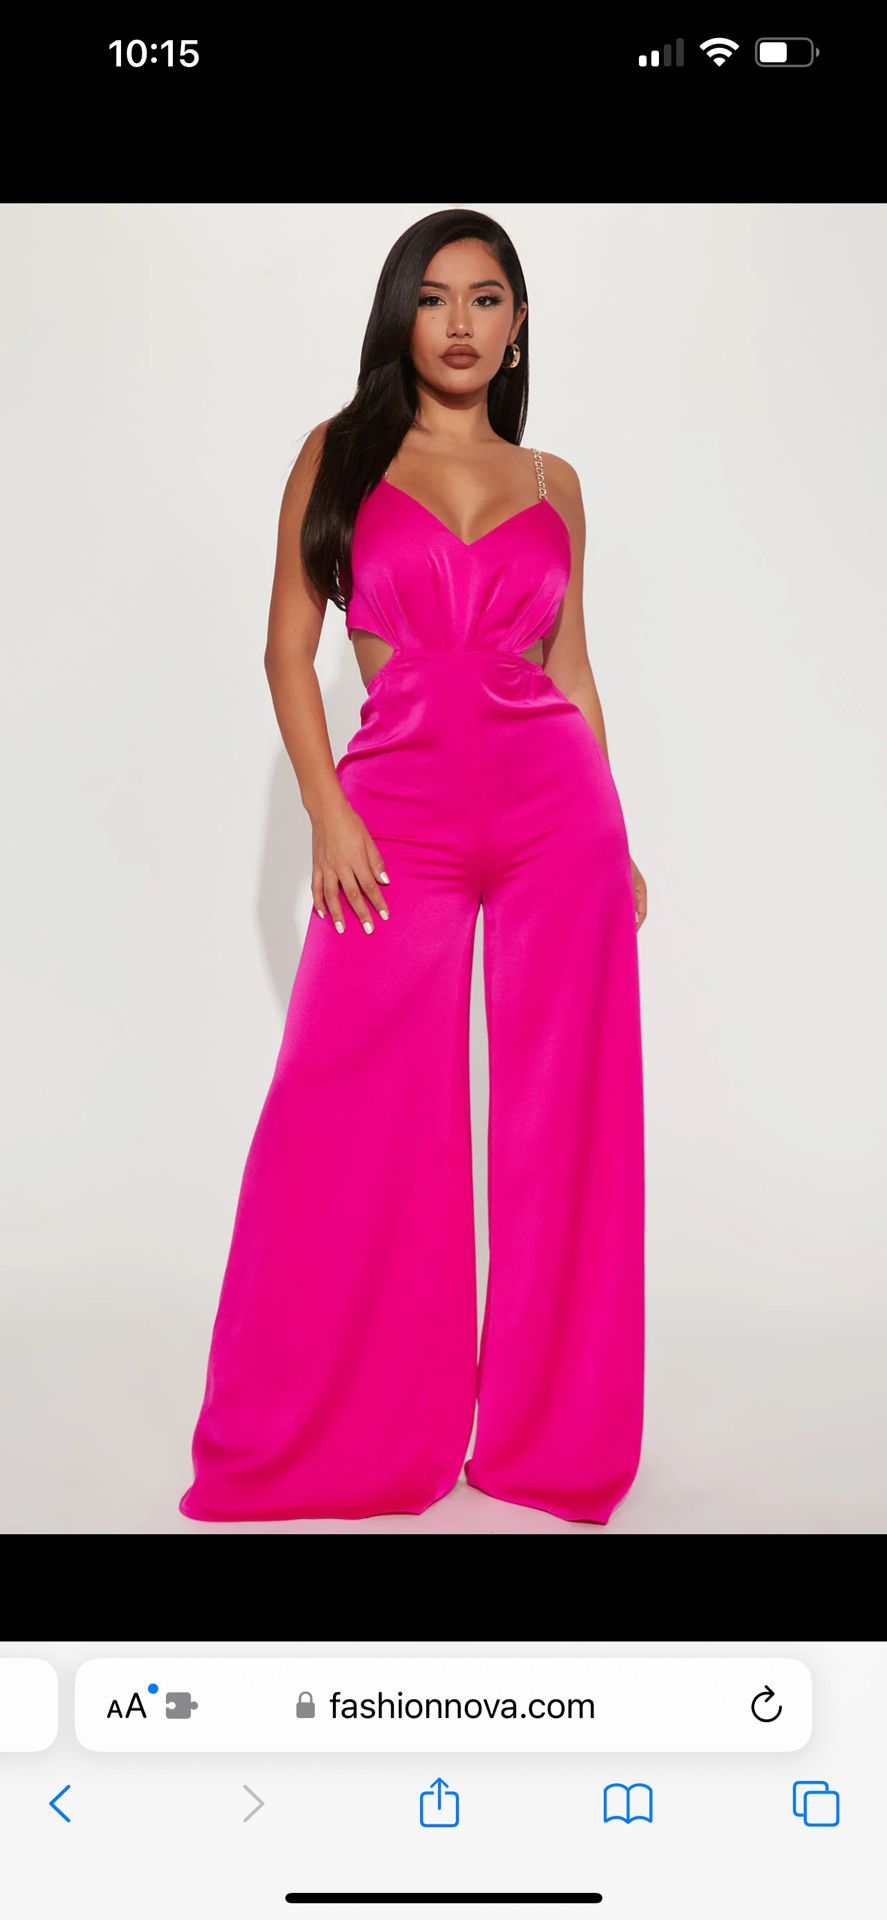 Fashion nova Jumpsuit Summer Pink Outfit 